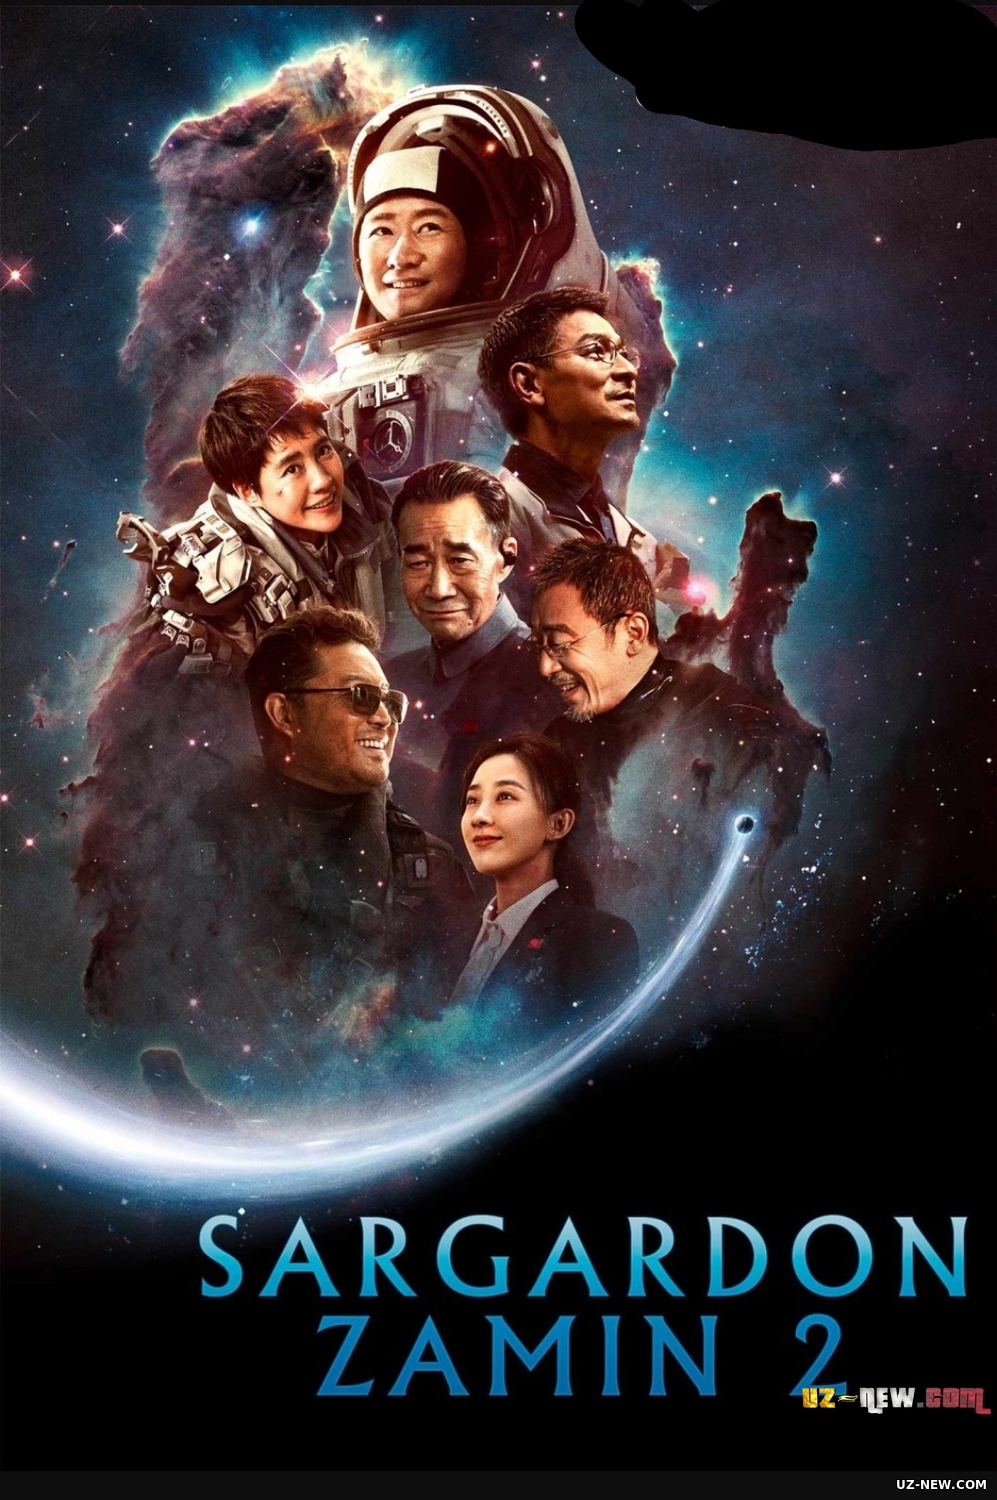 Sargardon zamin 2 / Sarson zamin 2 Xitoy filmi Uzbek tilida O'zbekcha 2023